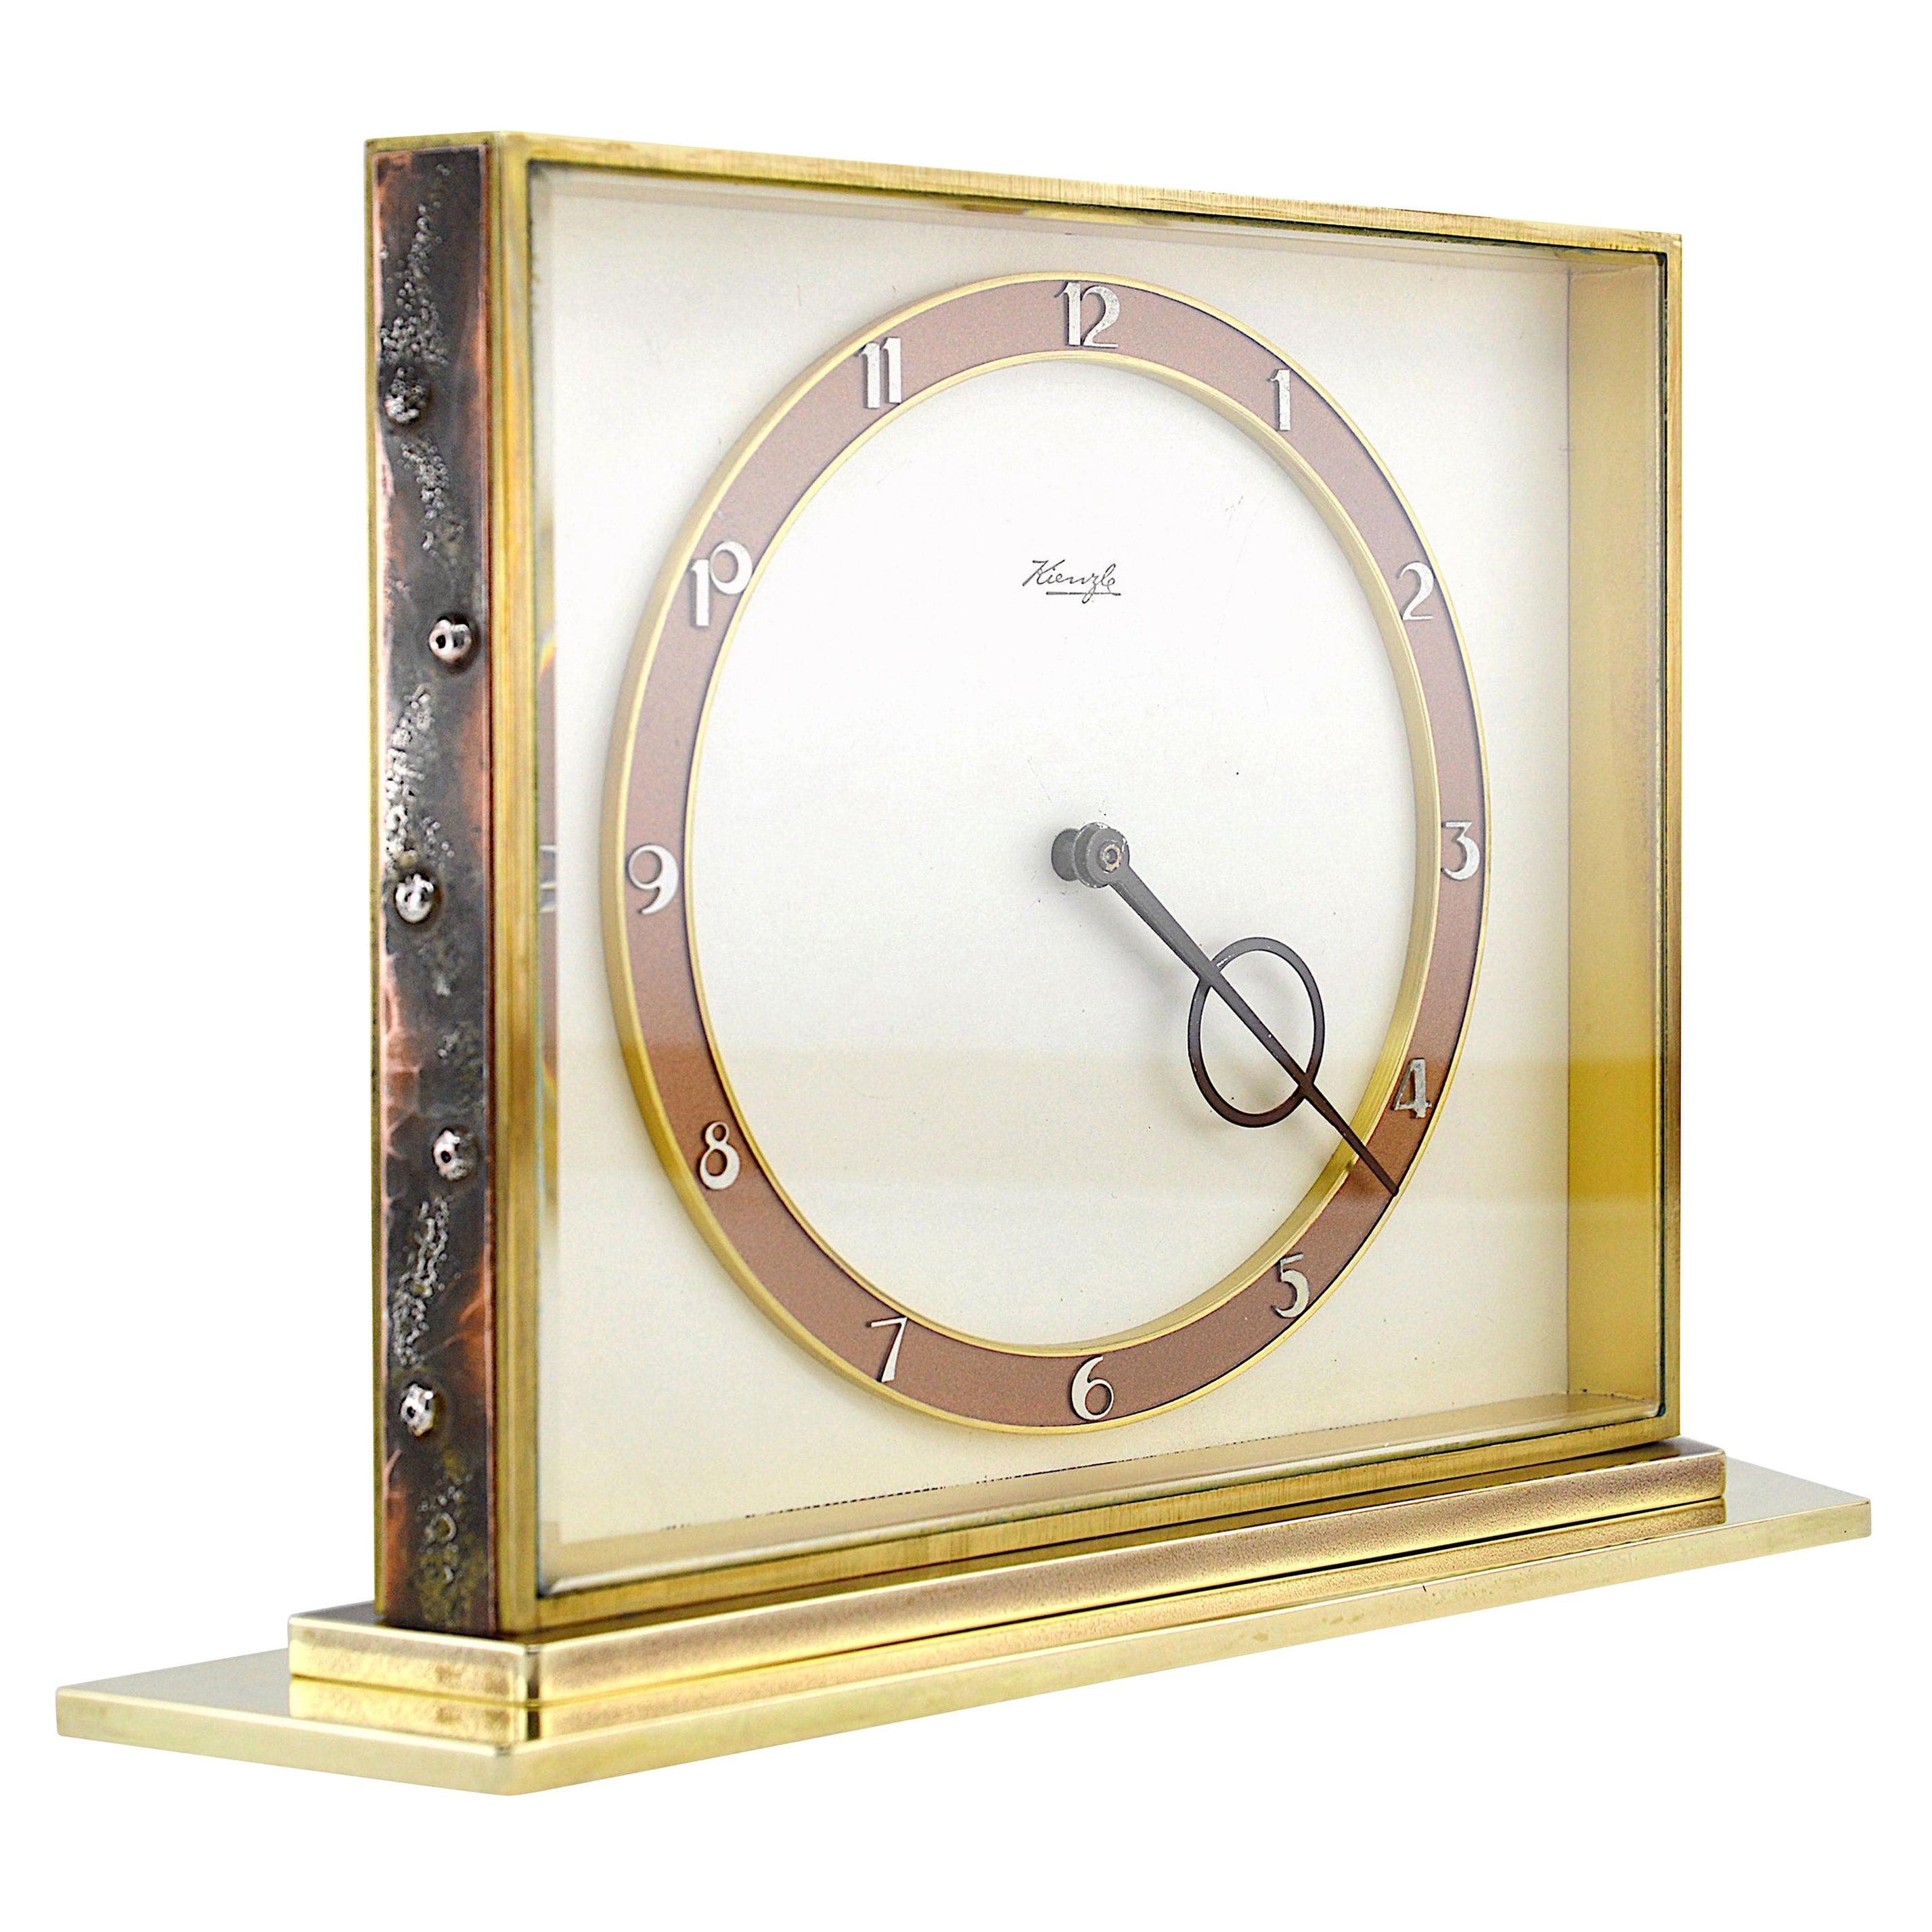 Hermle Bauhaus Art Deco clock Vintage desk clock Mid century modern German desk clock, Mid century clock Home decor Clocks